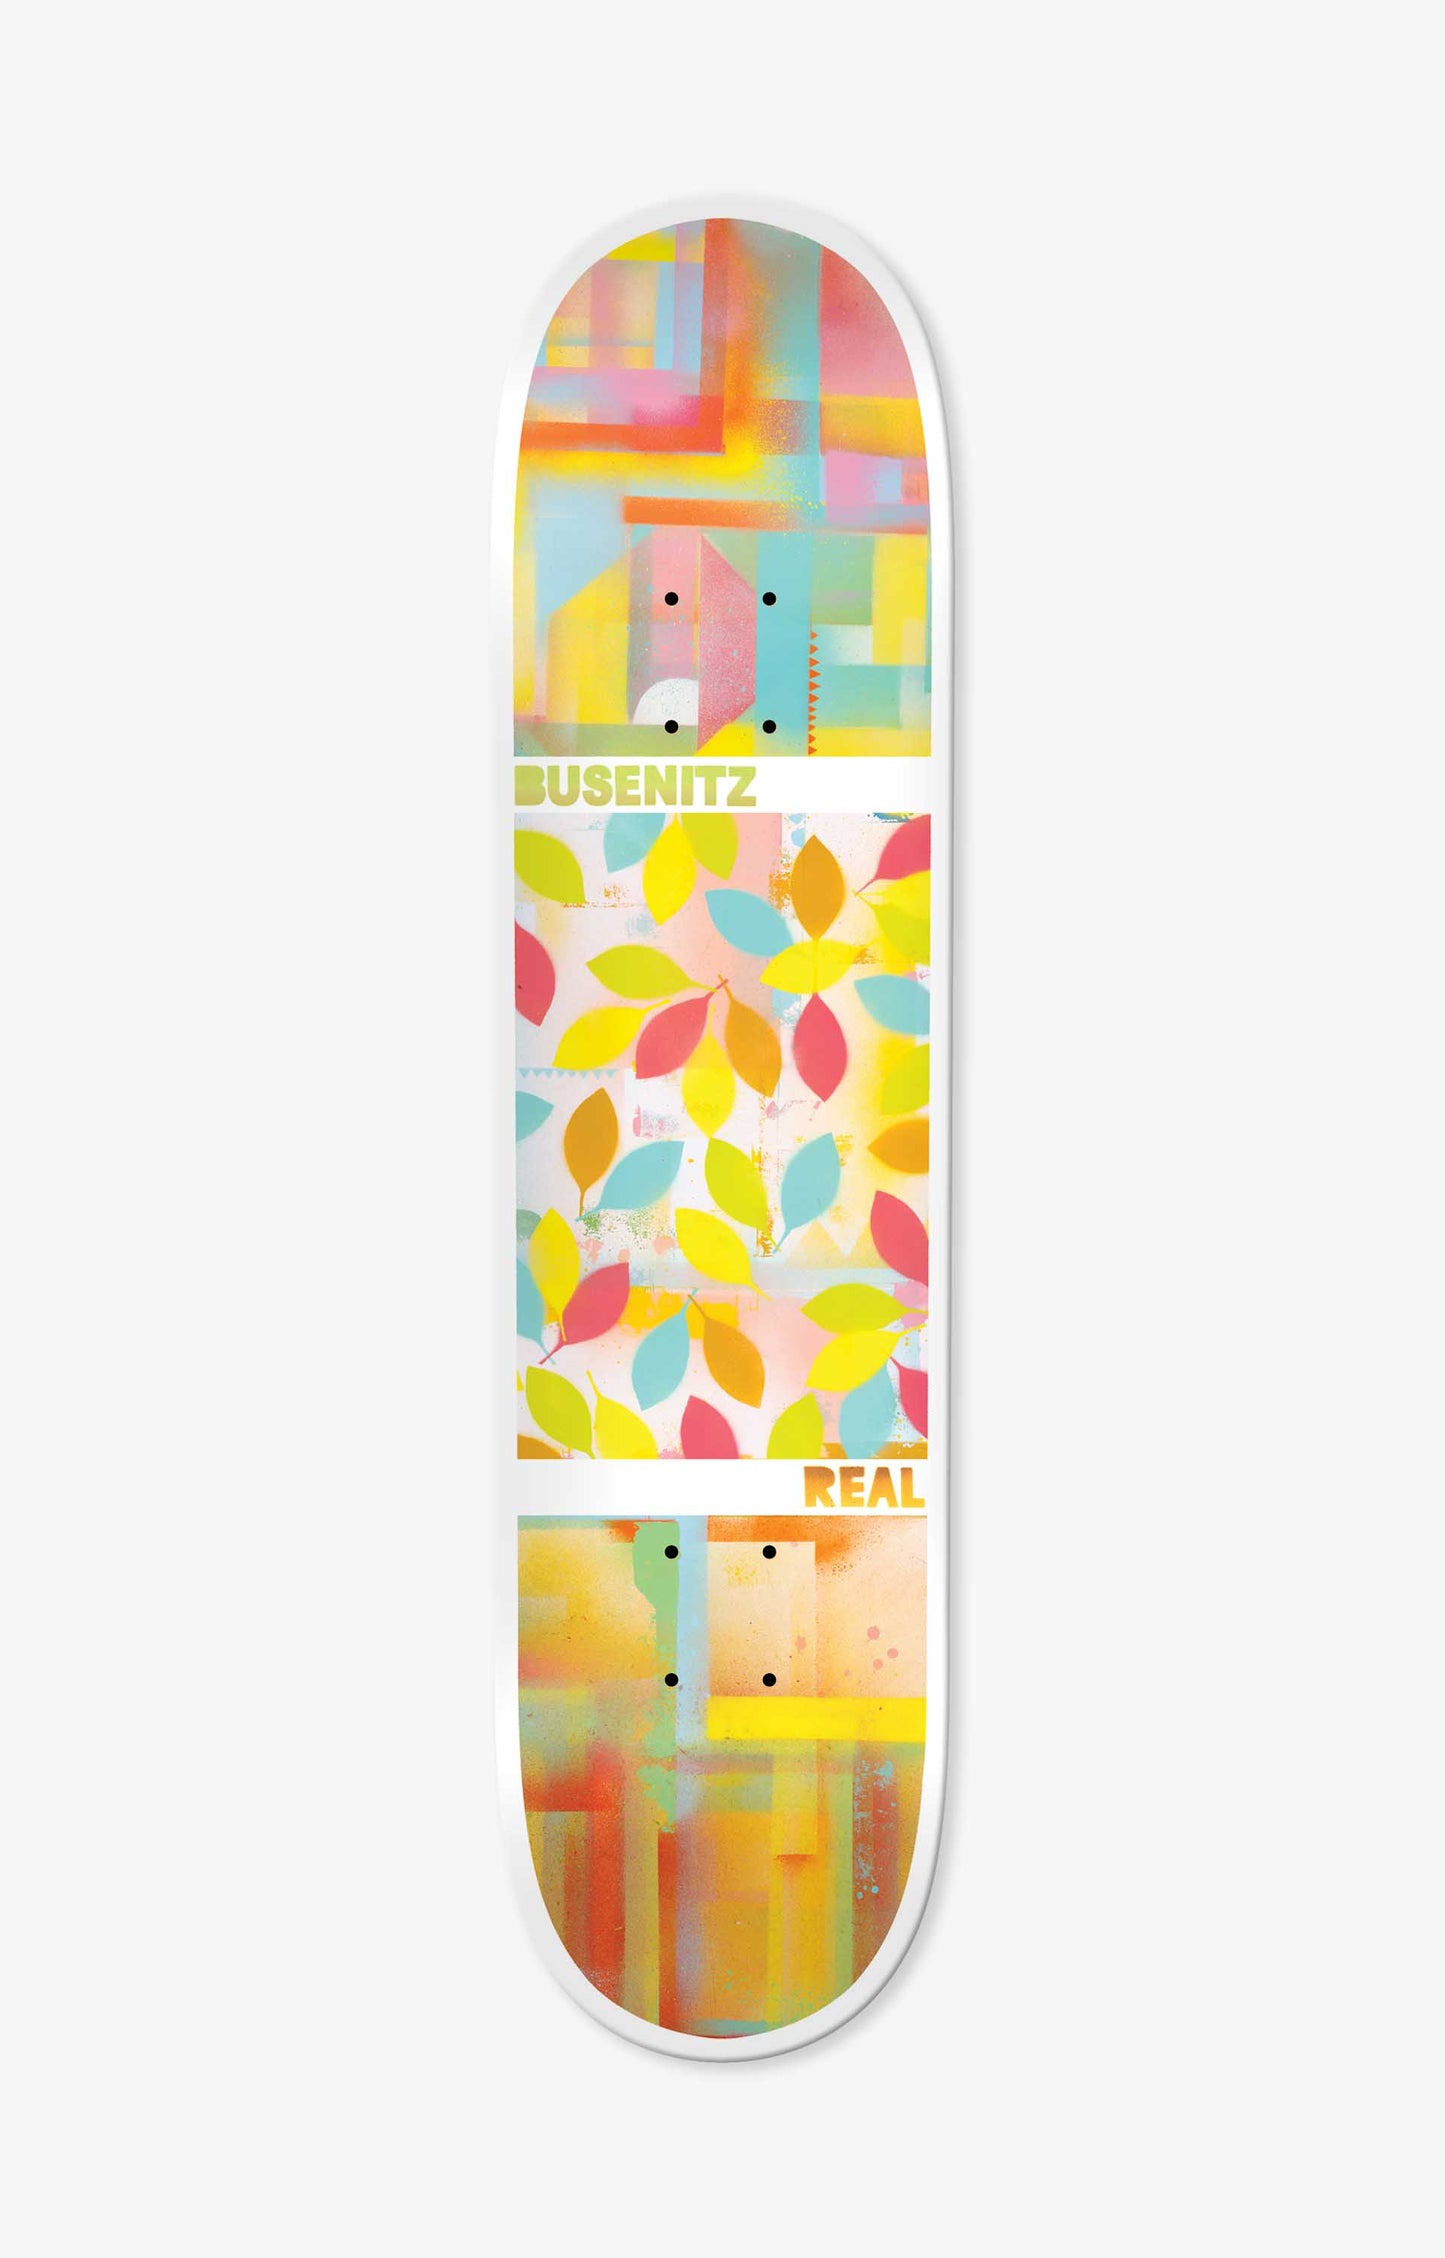 Real Busenitz Acrylics Skateboard Deck, 8.06"